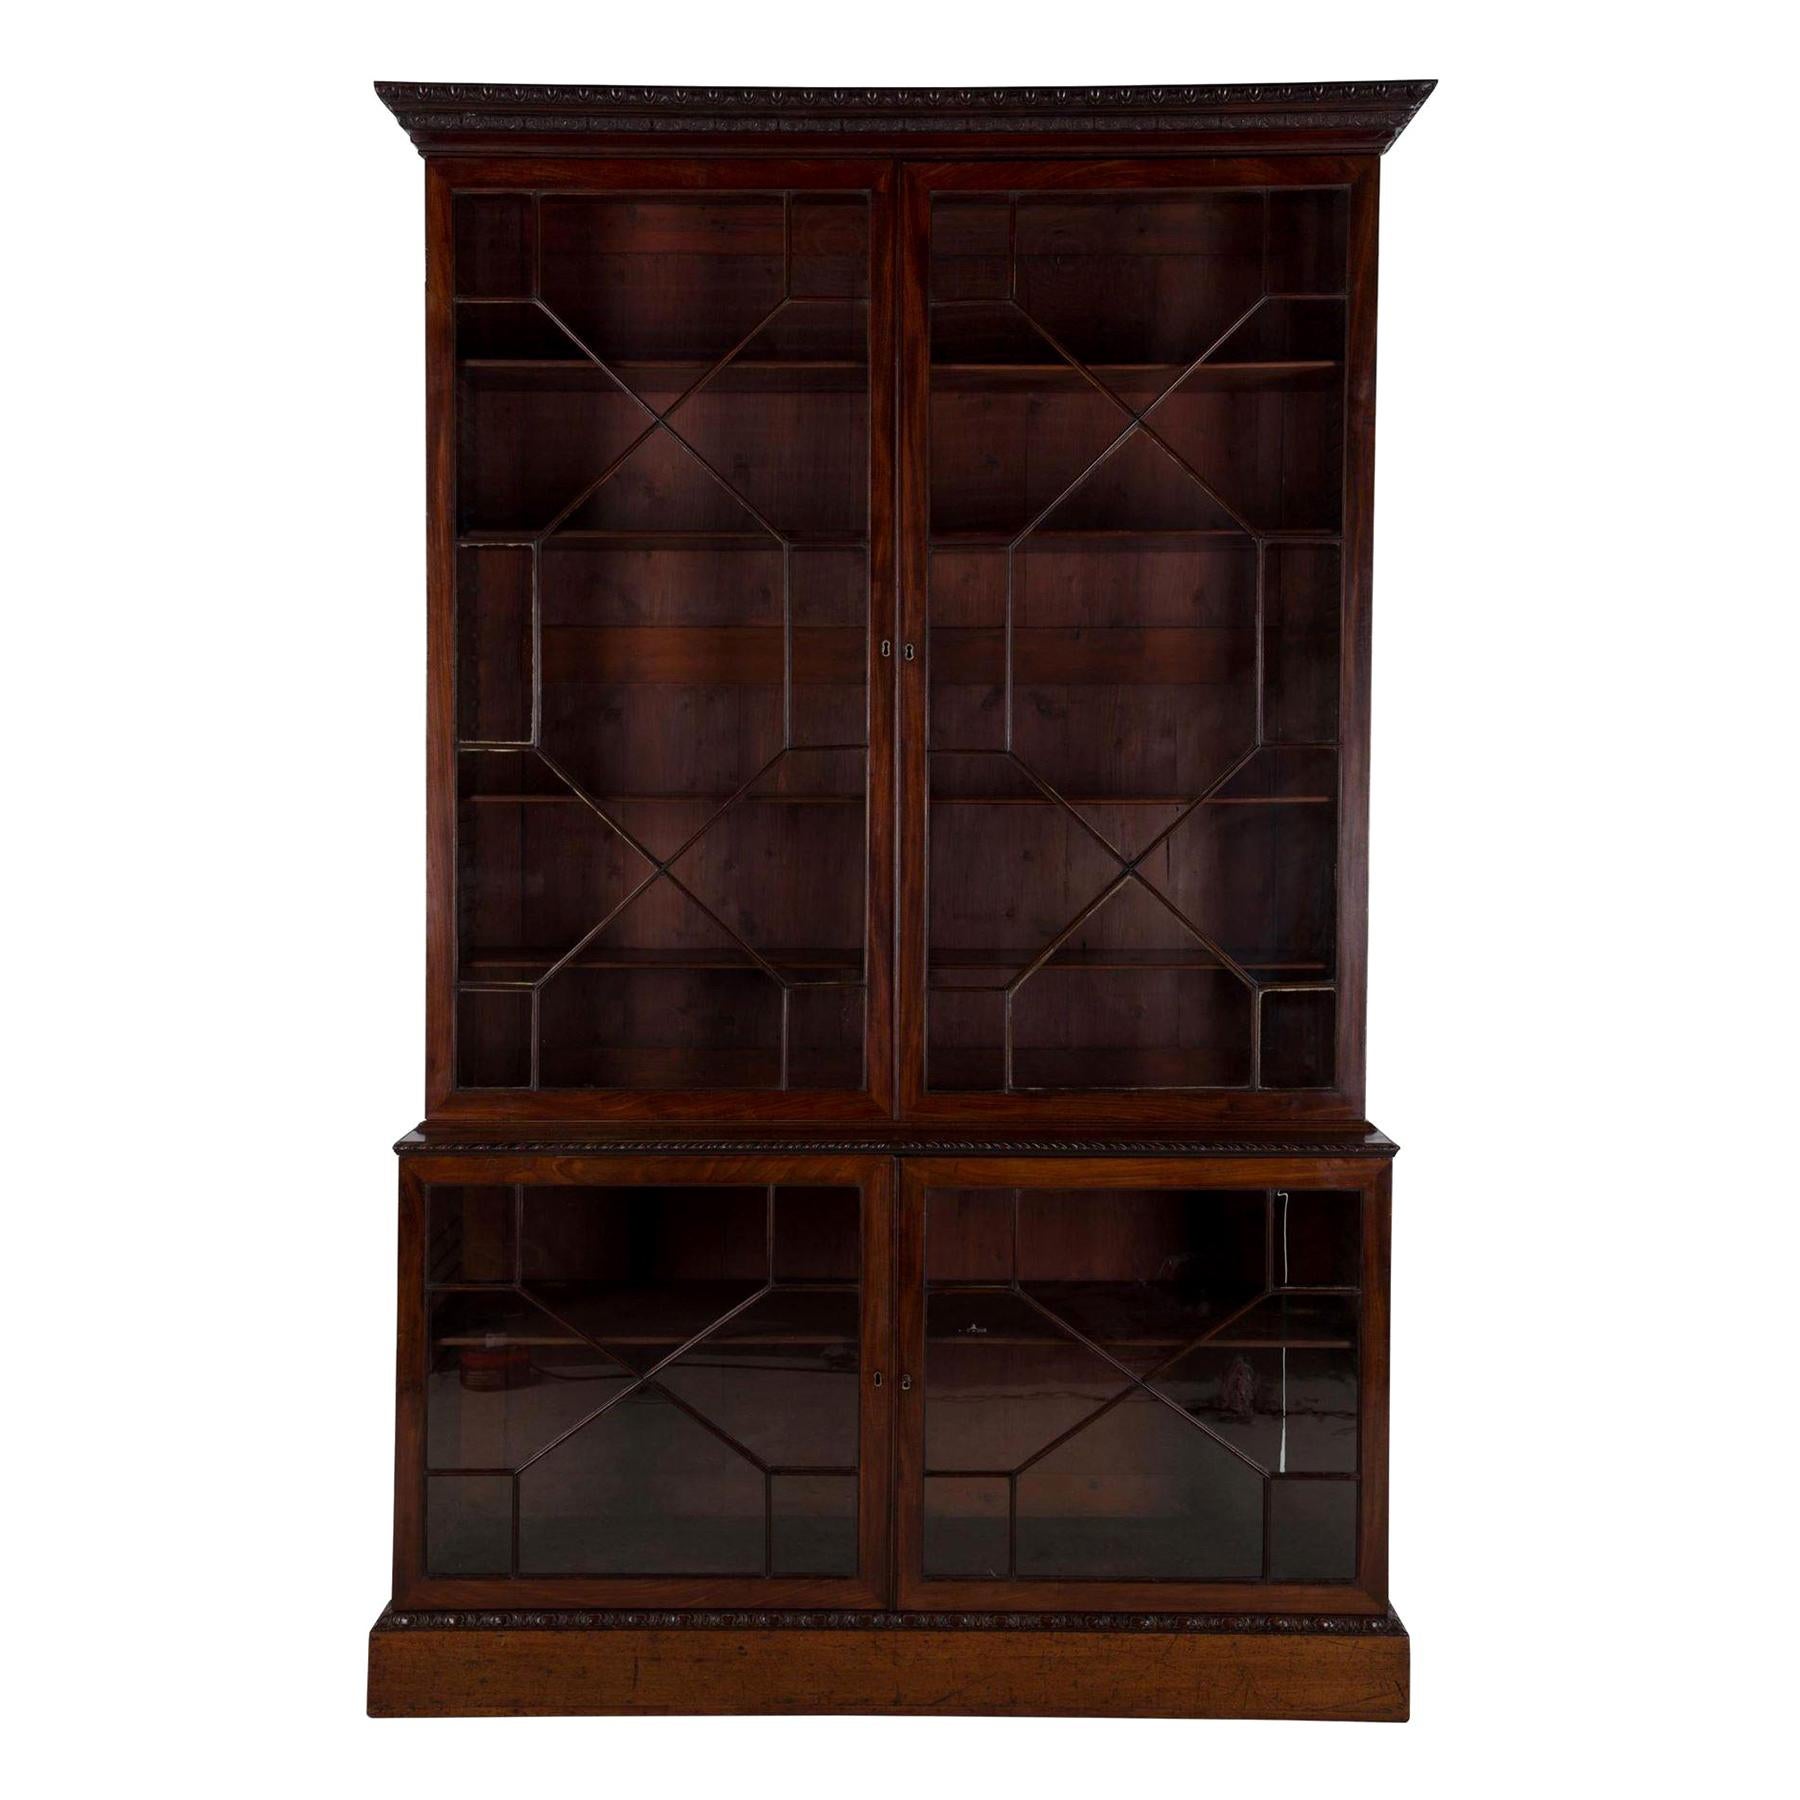 Chippendale Period Mahogany Bookcase